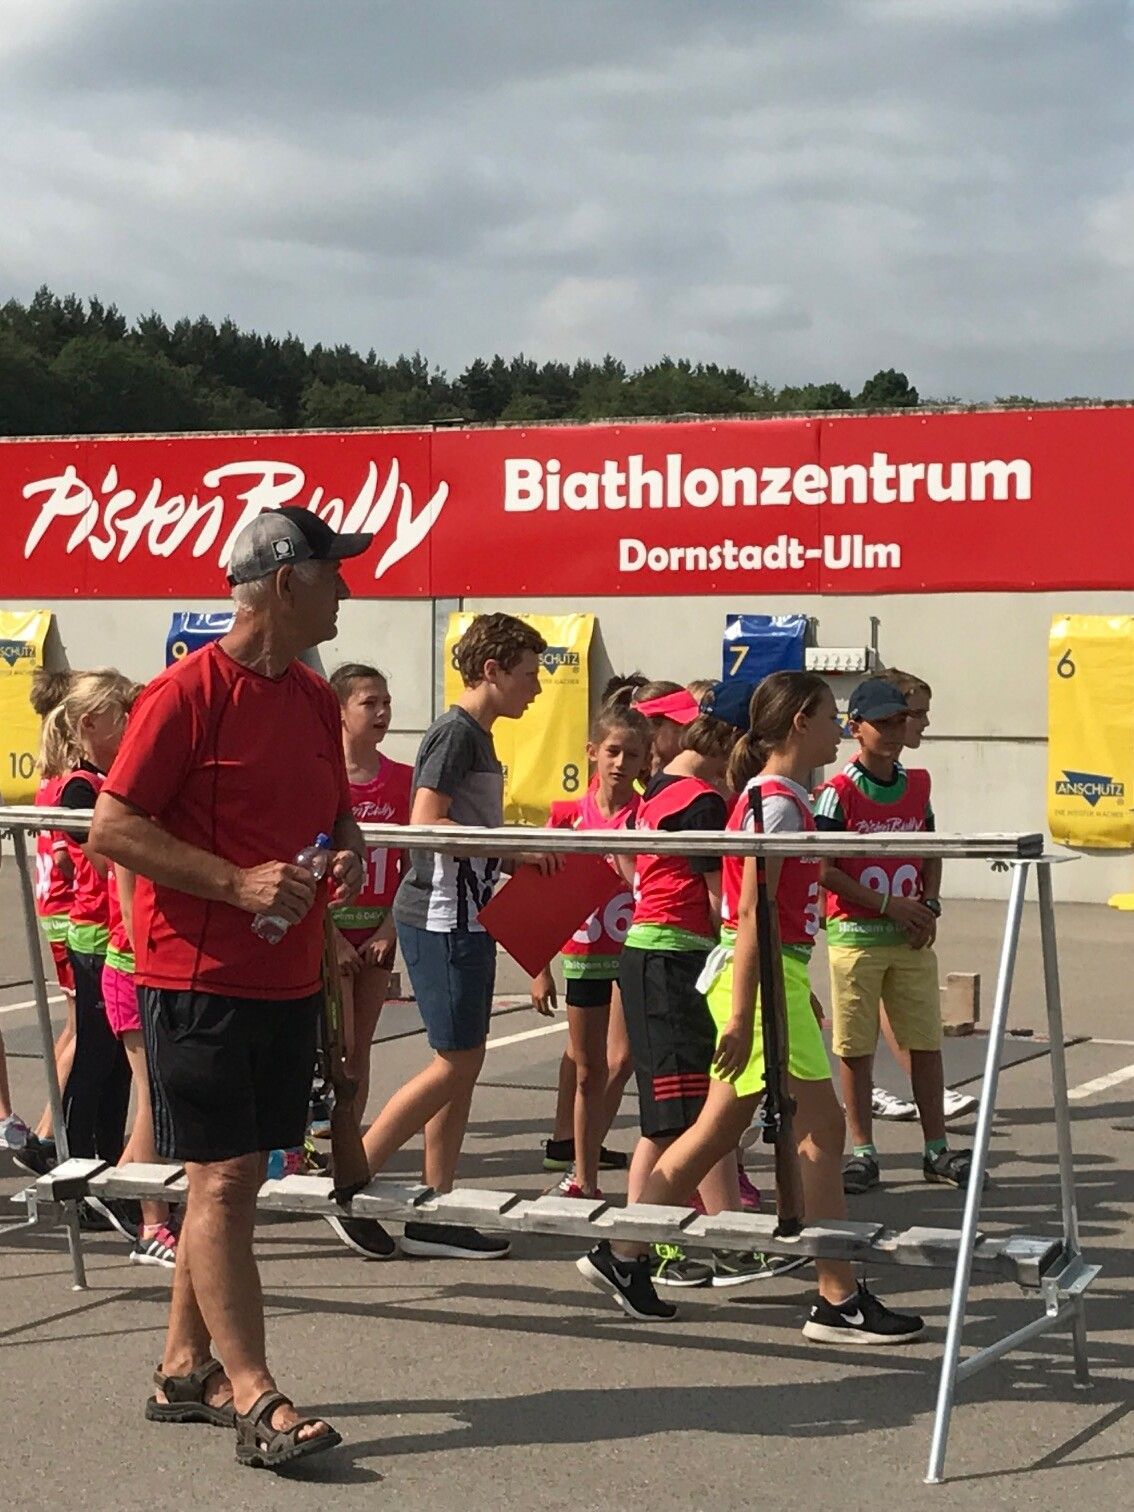 Kässbohrer PistenBully Sponsoring: PistenBully-Biathlonzentrum